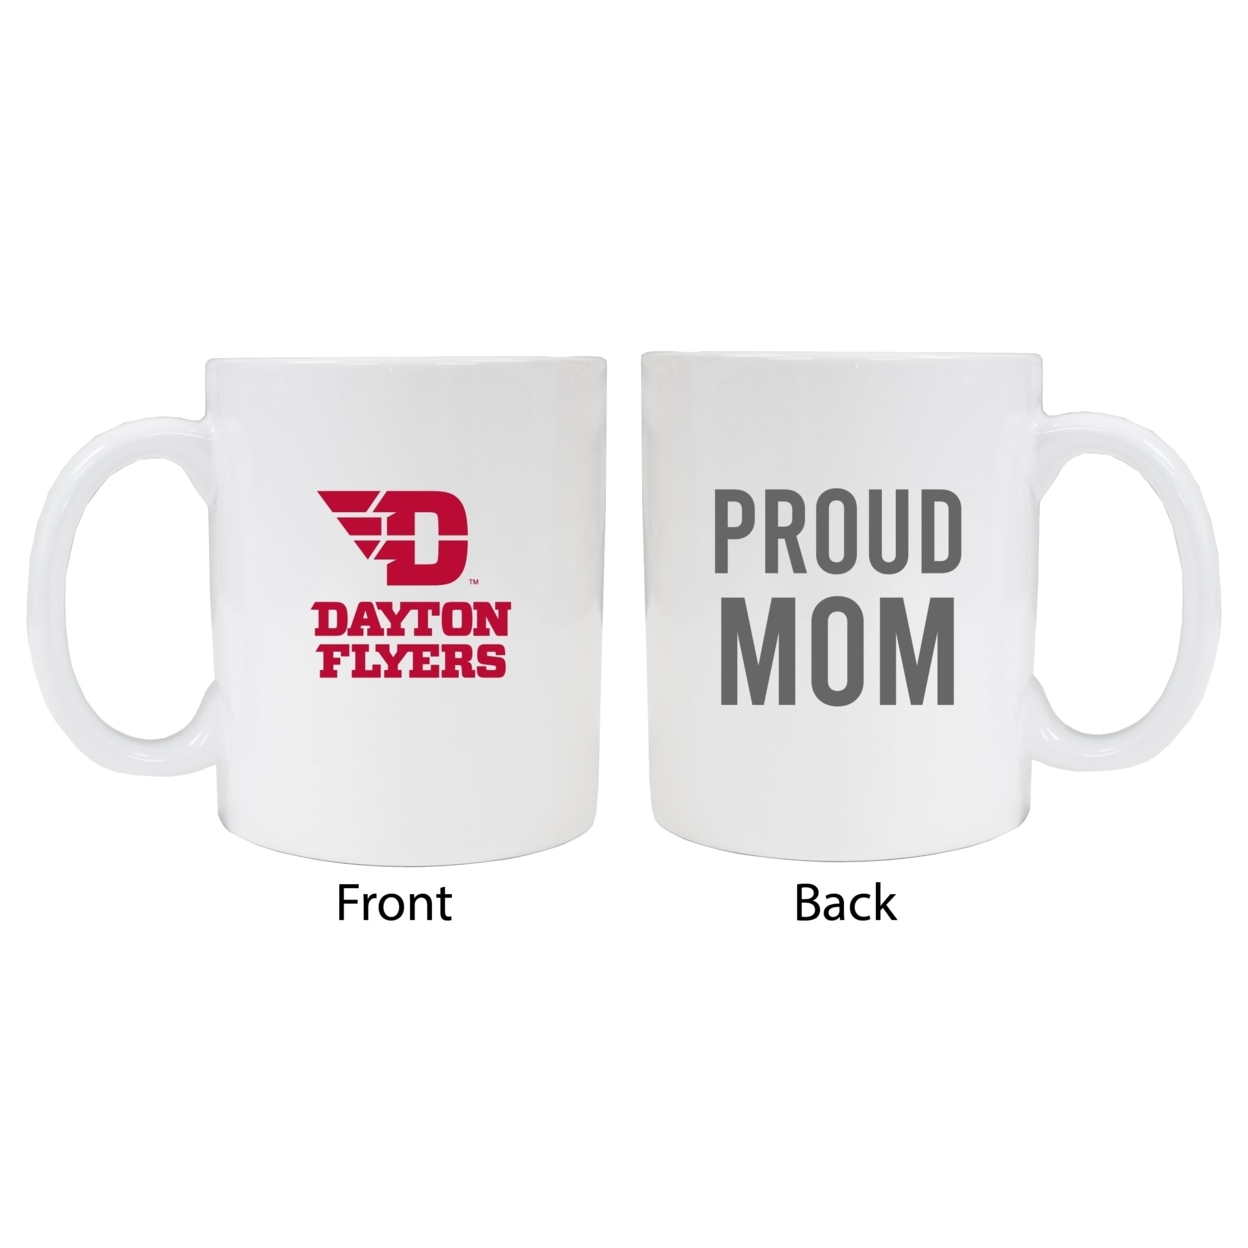 Dayton Flyers Proud Mom Ceramic Coffee Mug - White